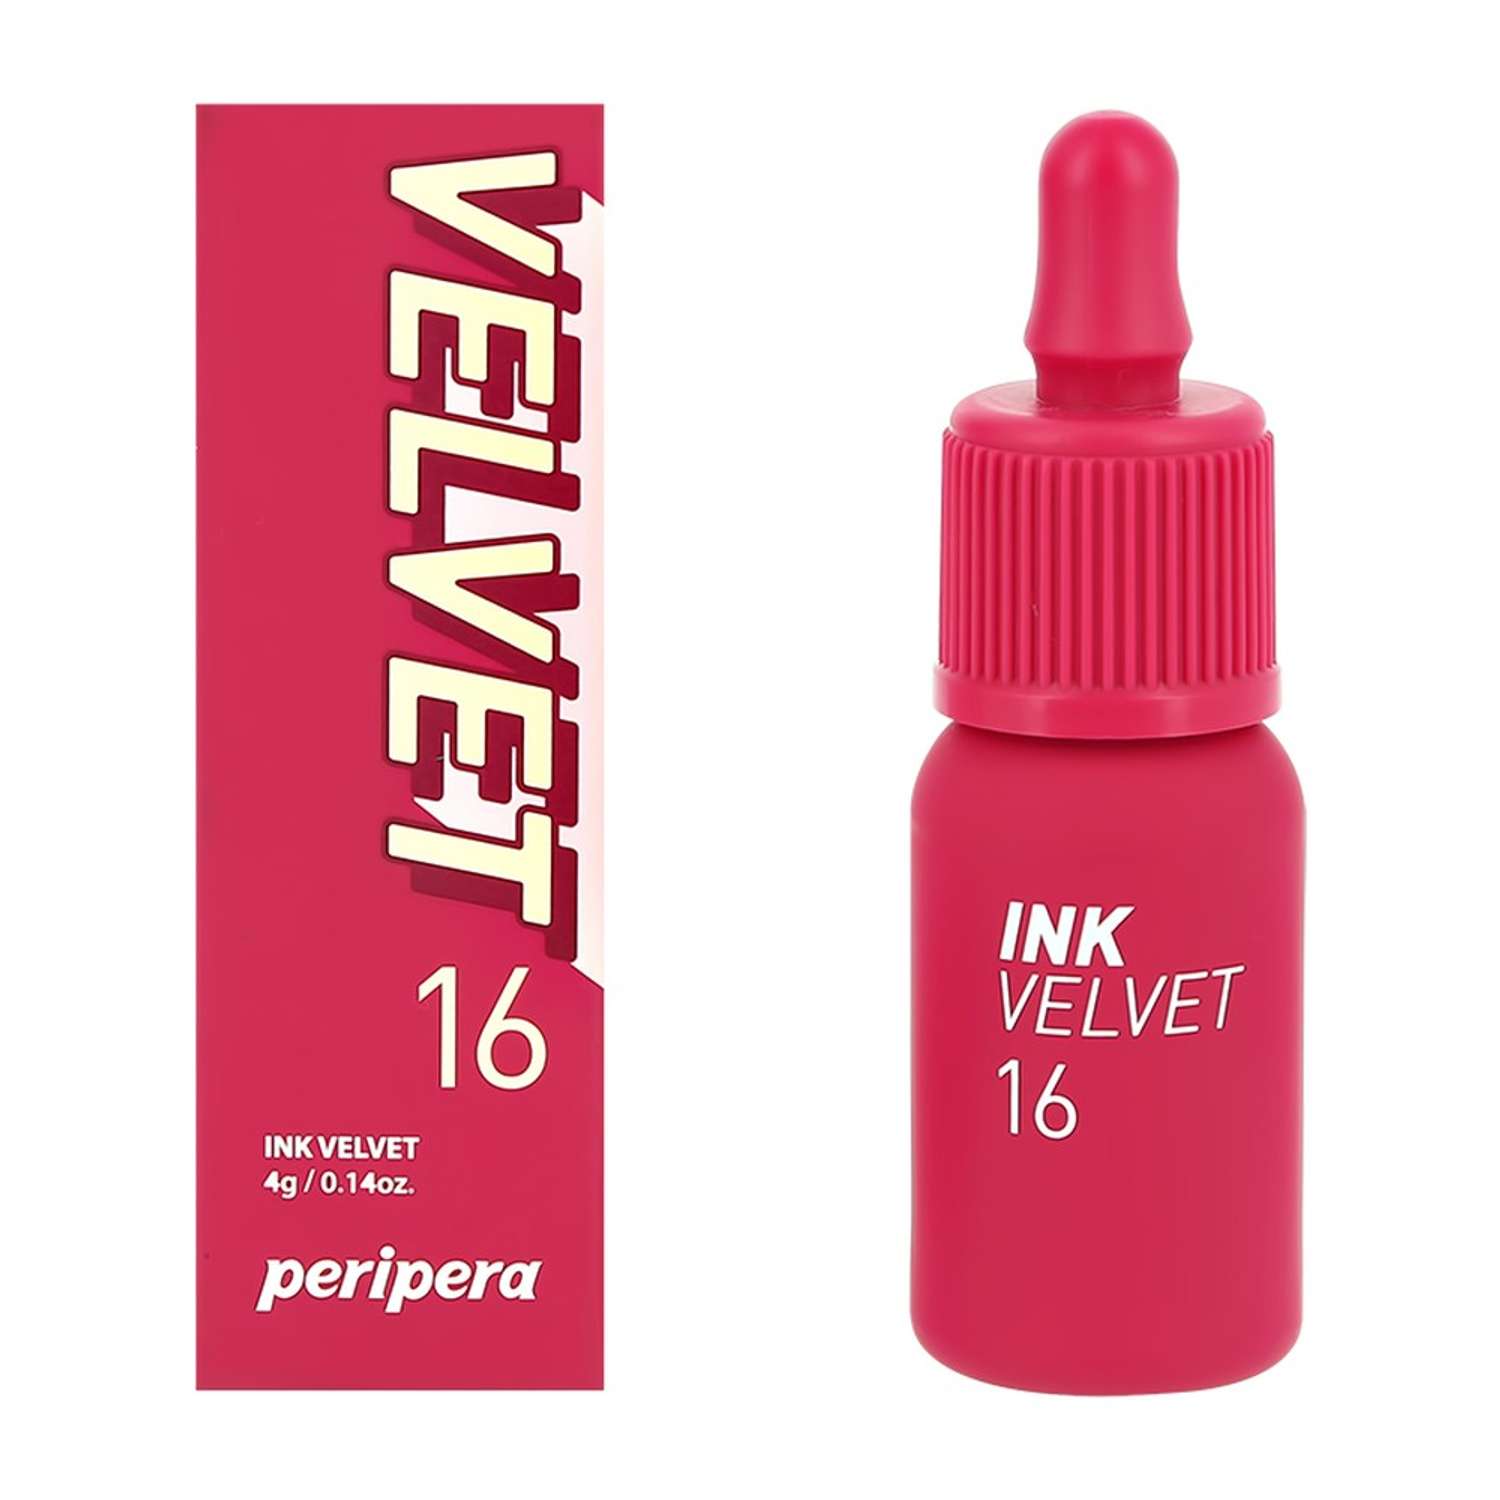 Помада для губ Peripera Velvet жидкая тон 16 heart fuchsia pink - фото 3